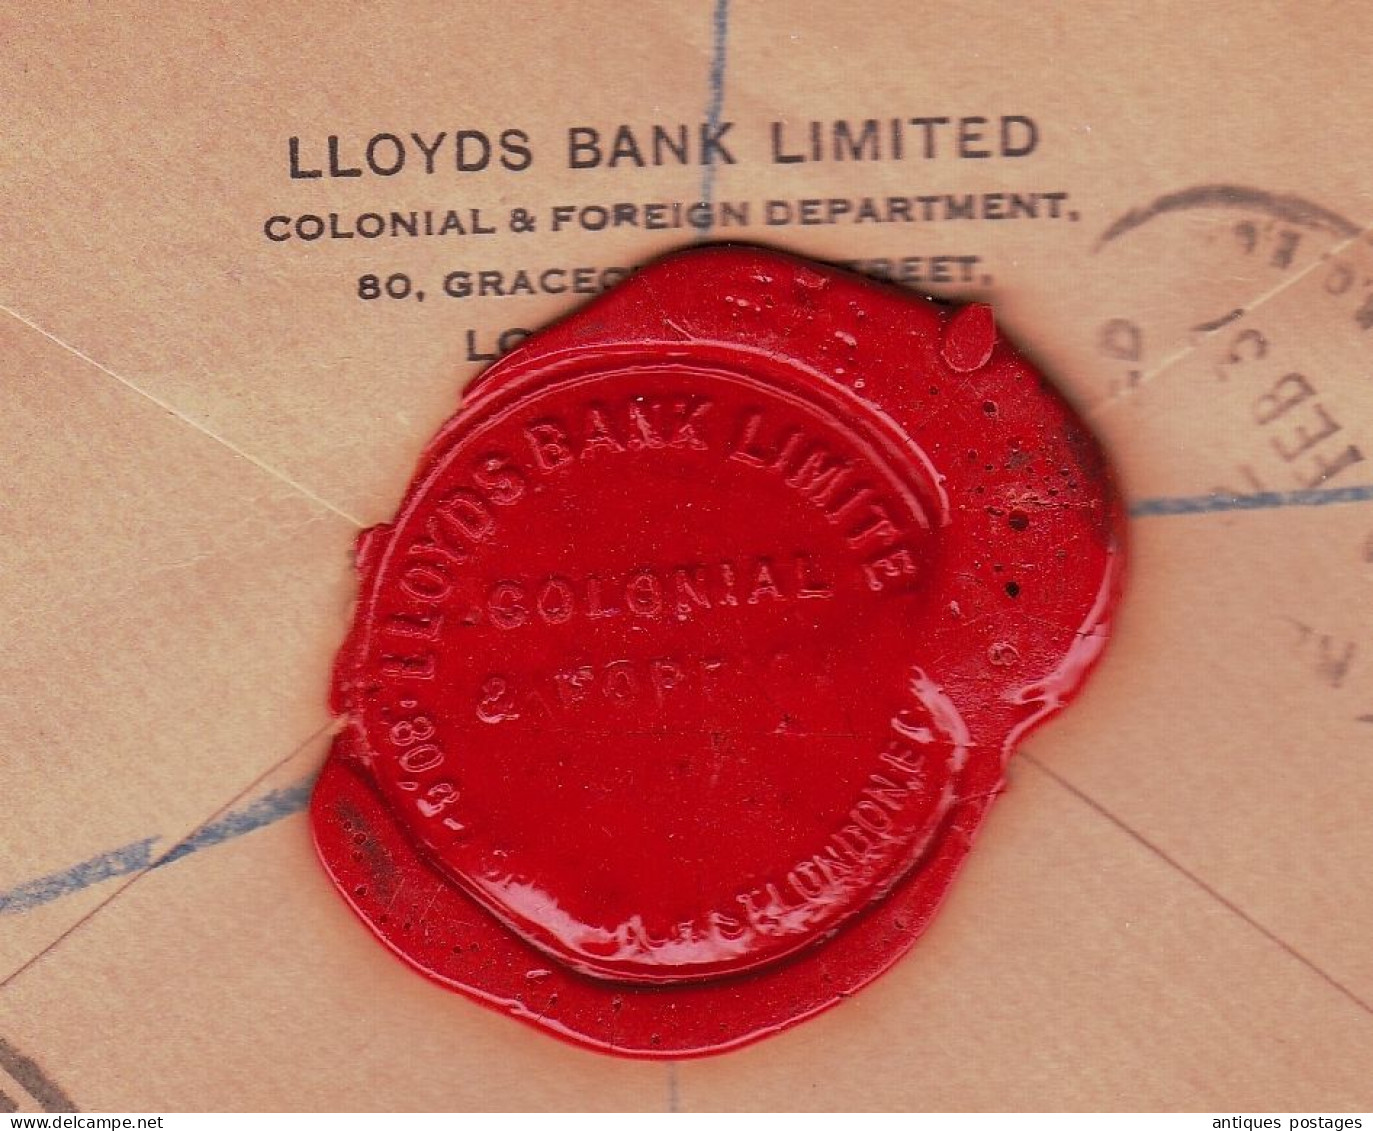 Registered 1937 London Lloyds Bank Limited Colonial & Foreign Department Basel Switzerland Banque Commerciale de Bâle